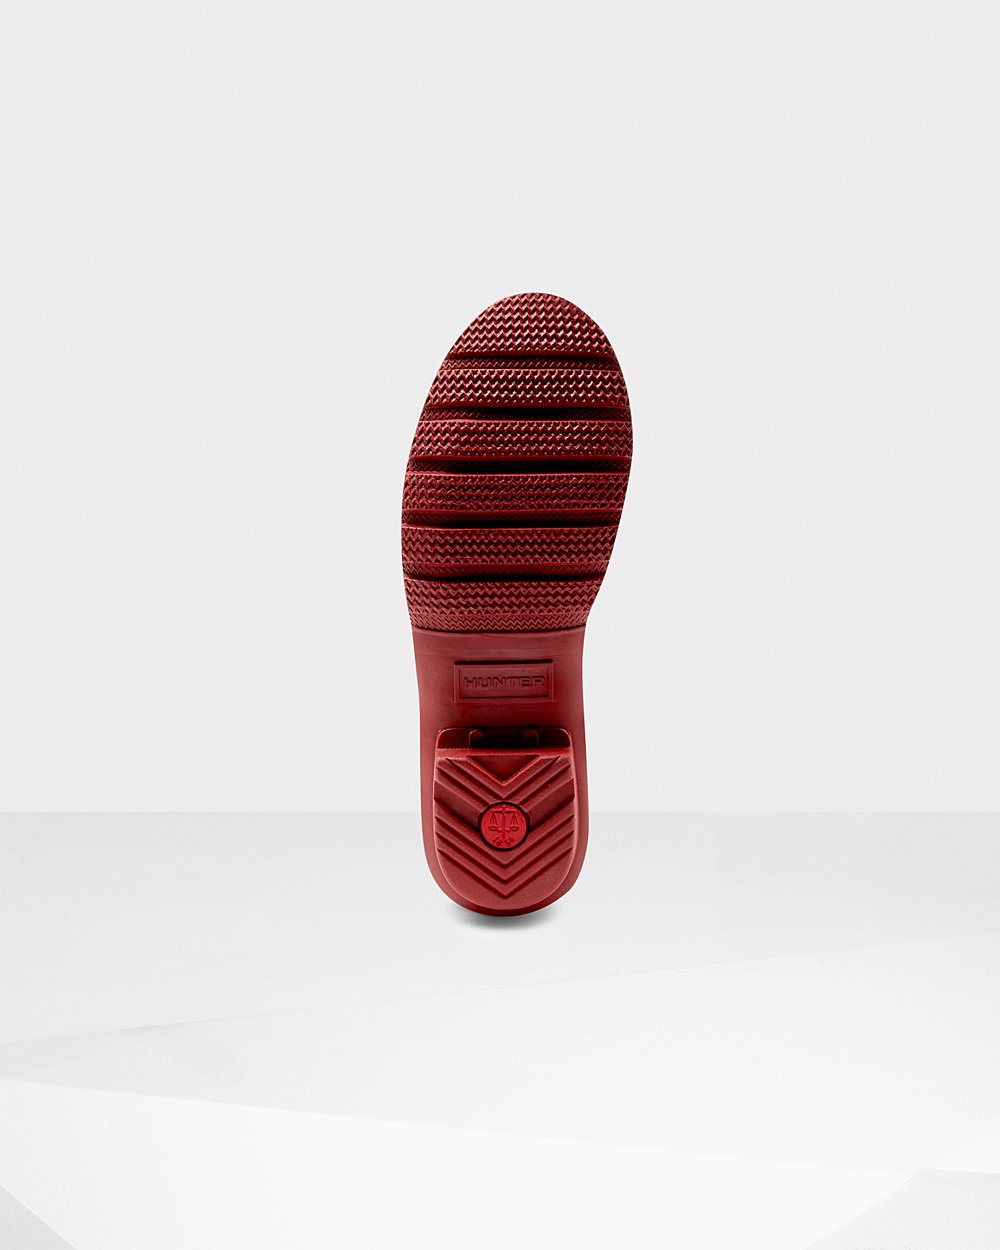 Womens Tall Rain Boots - Hunter Original Exploded Logo (69PWYCZSF) - Grey Red